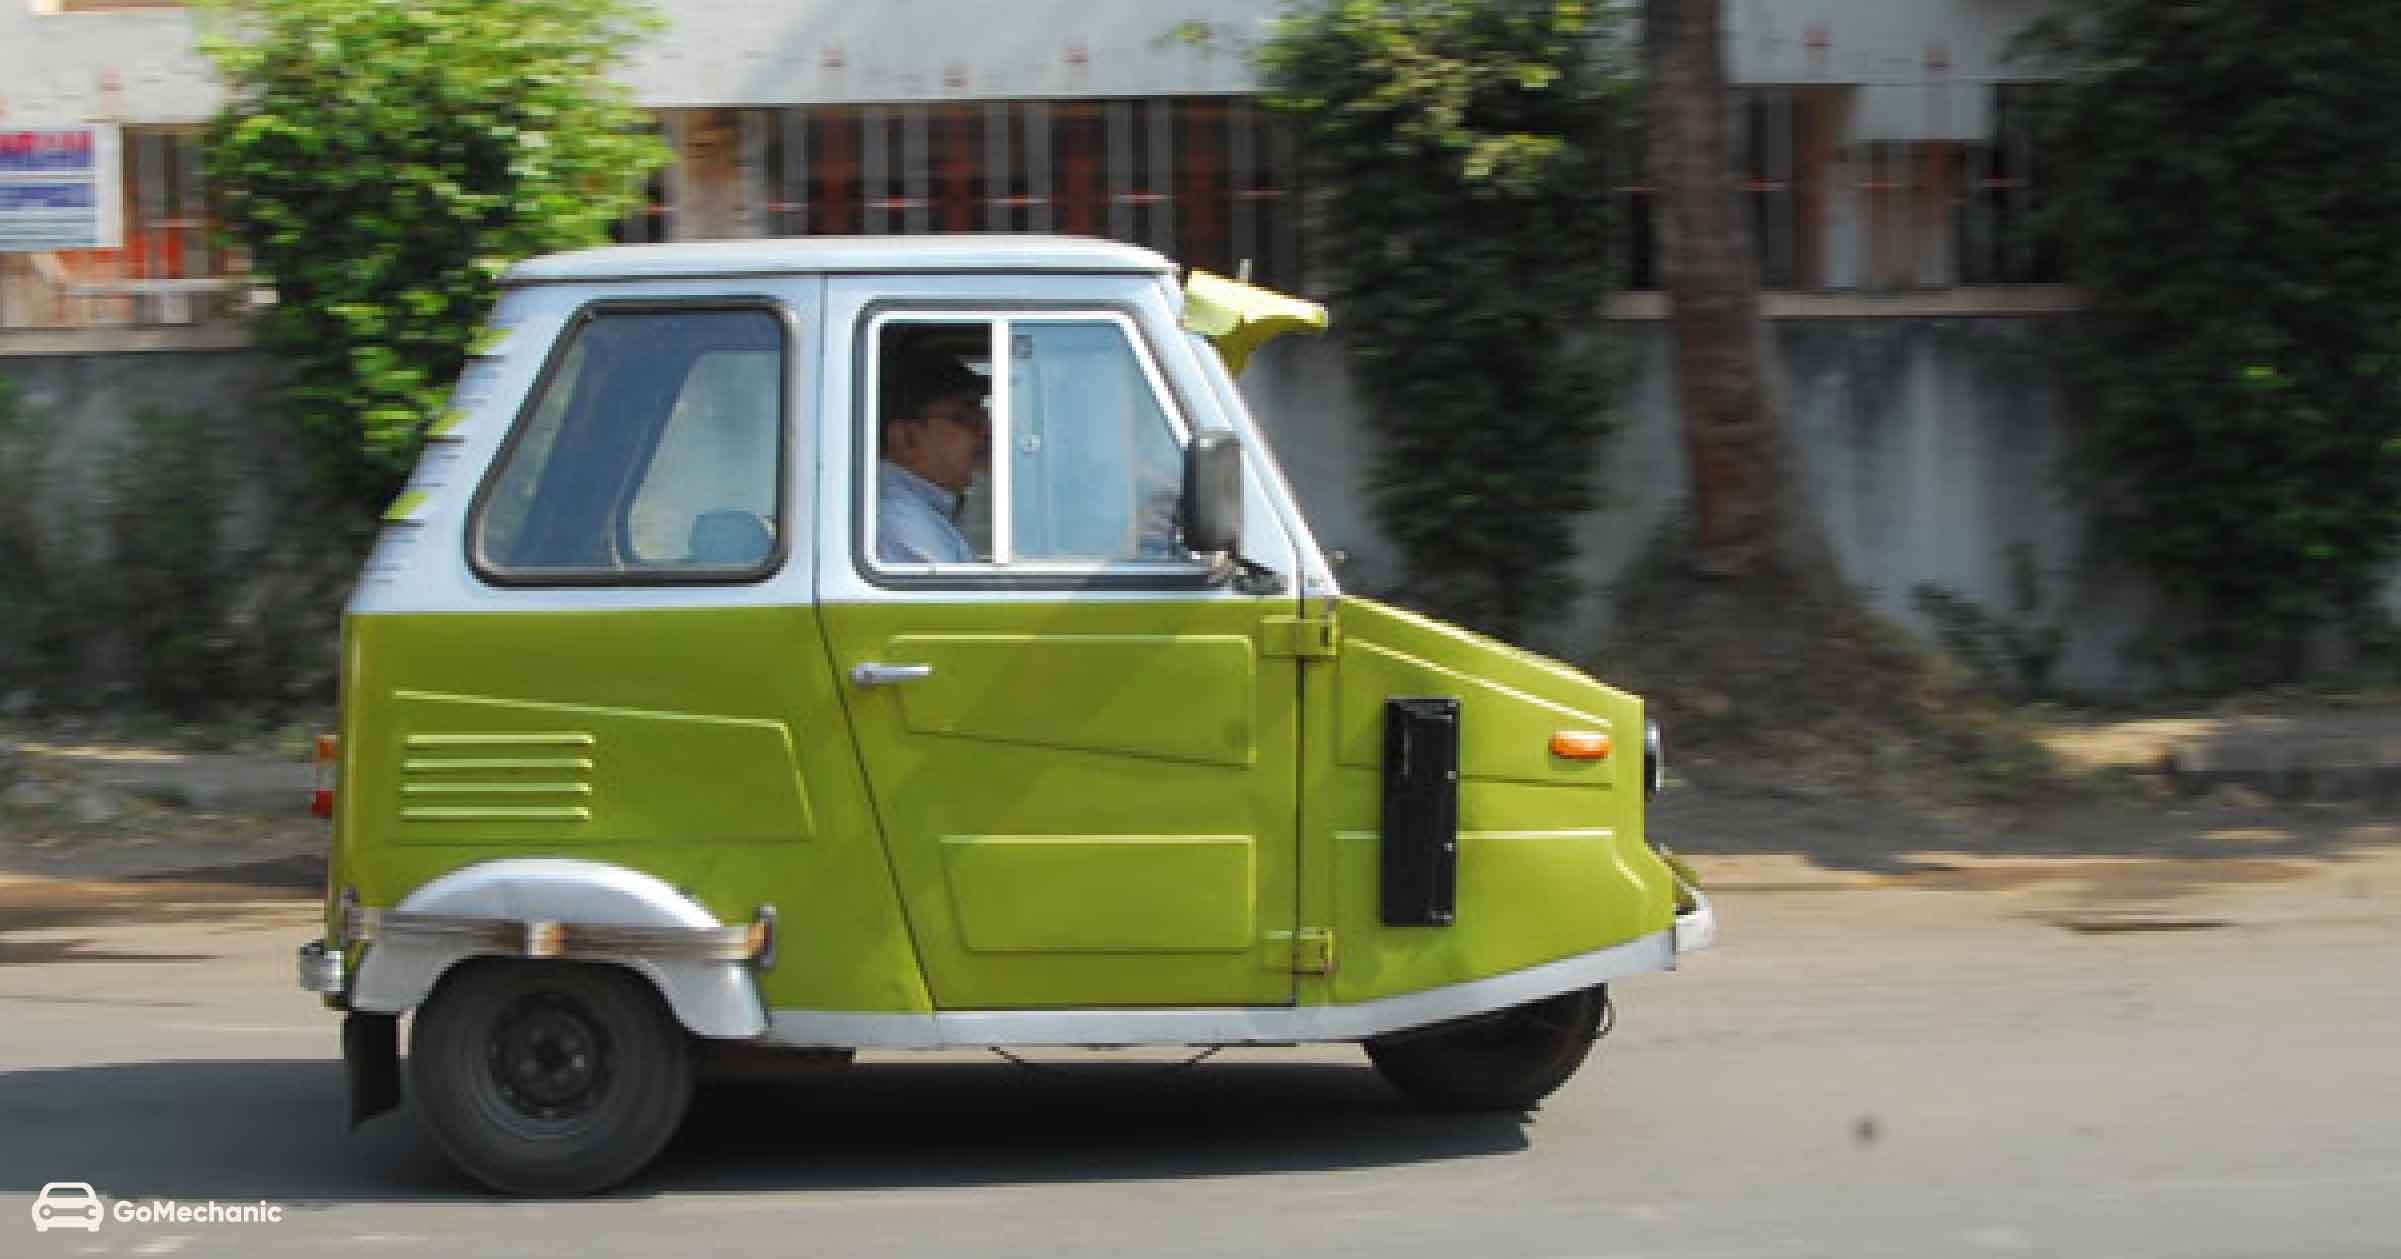 Bajaj PTV (Personal Transport Vehicle) A Qute Car from